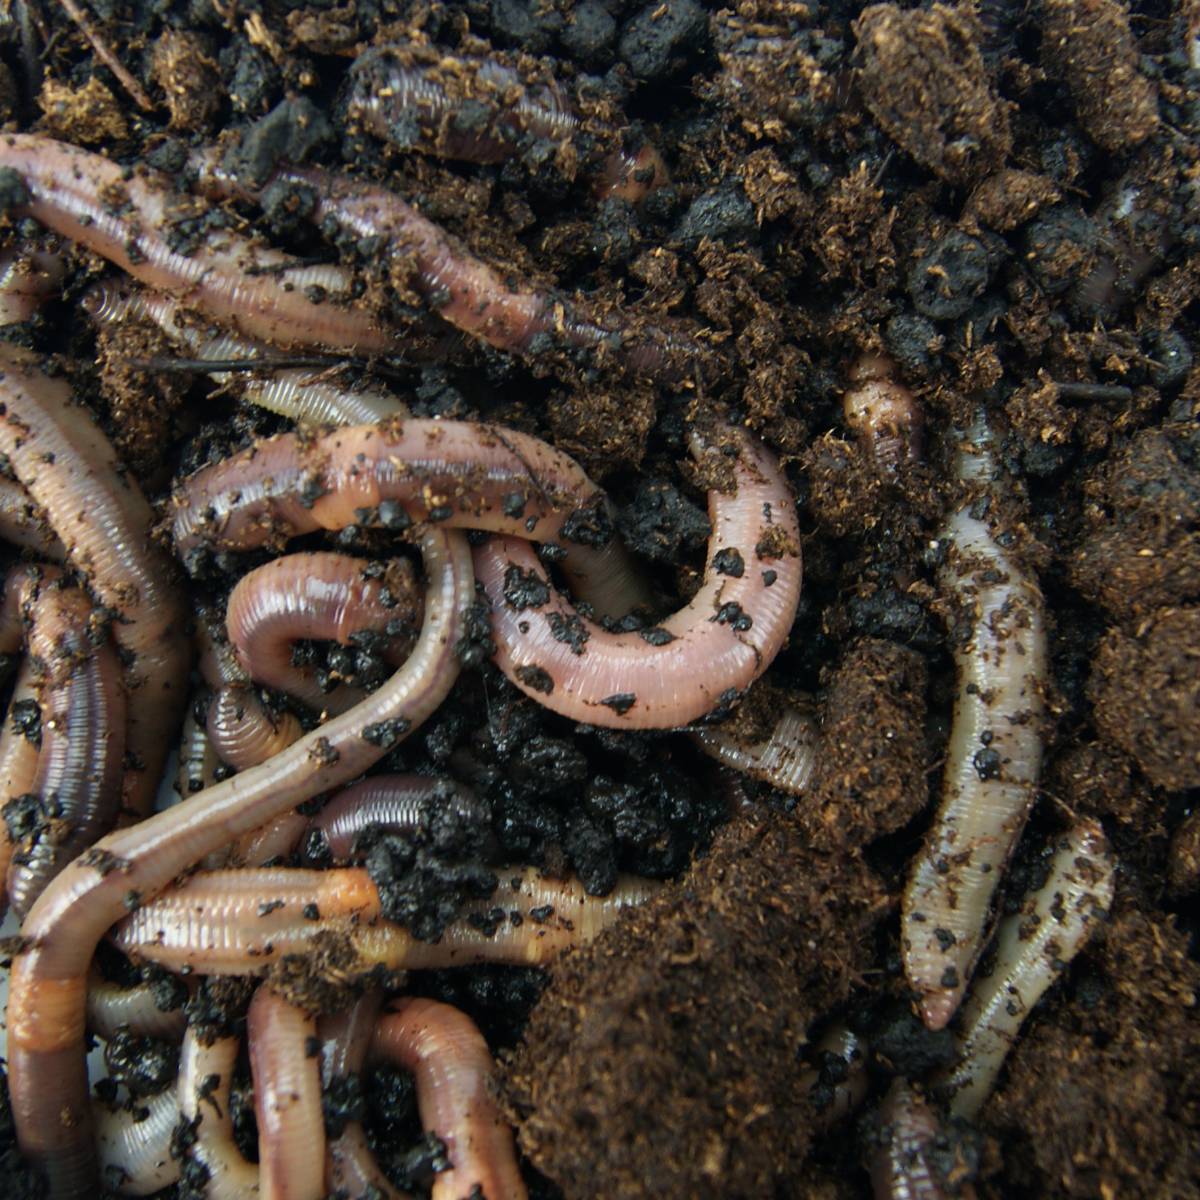  500 Big Canadian Nightcrawler Worms for Fishing in